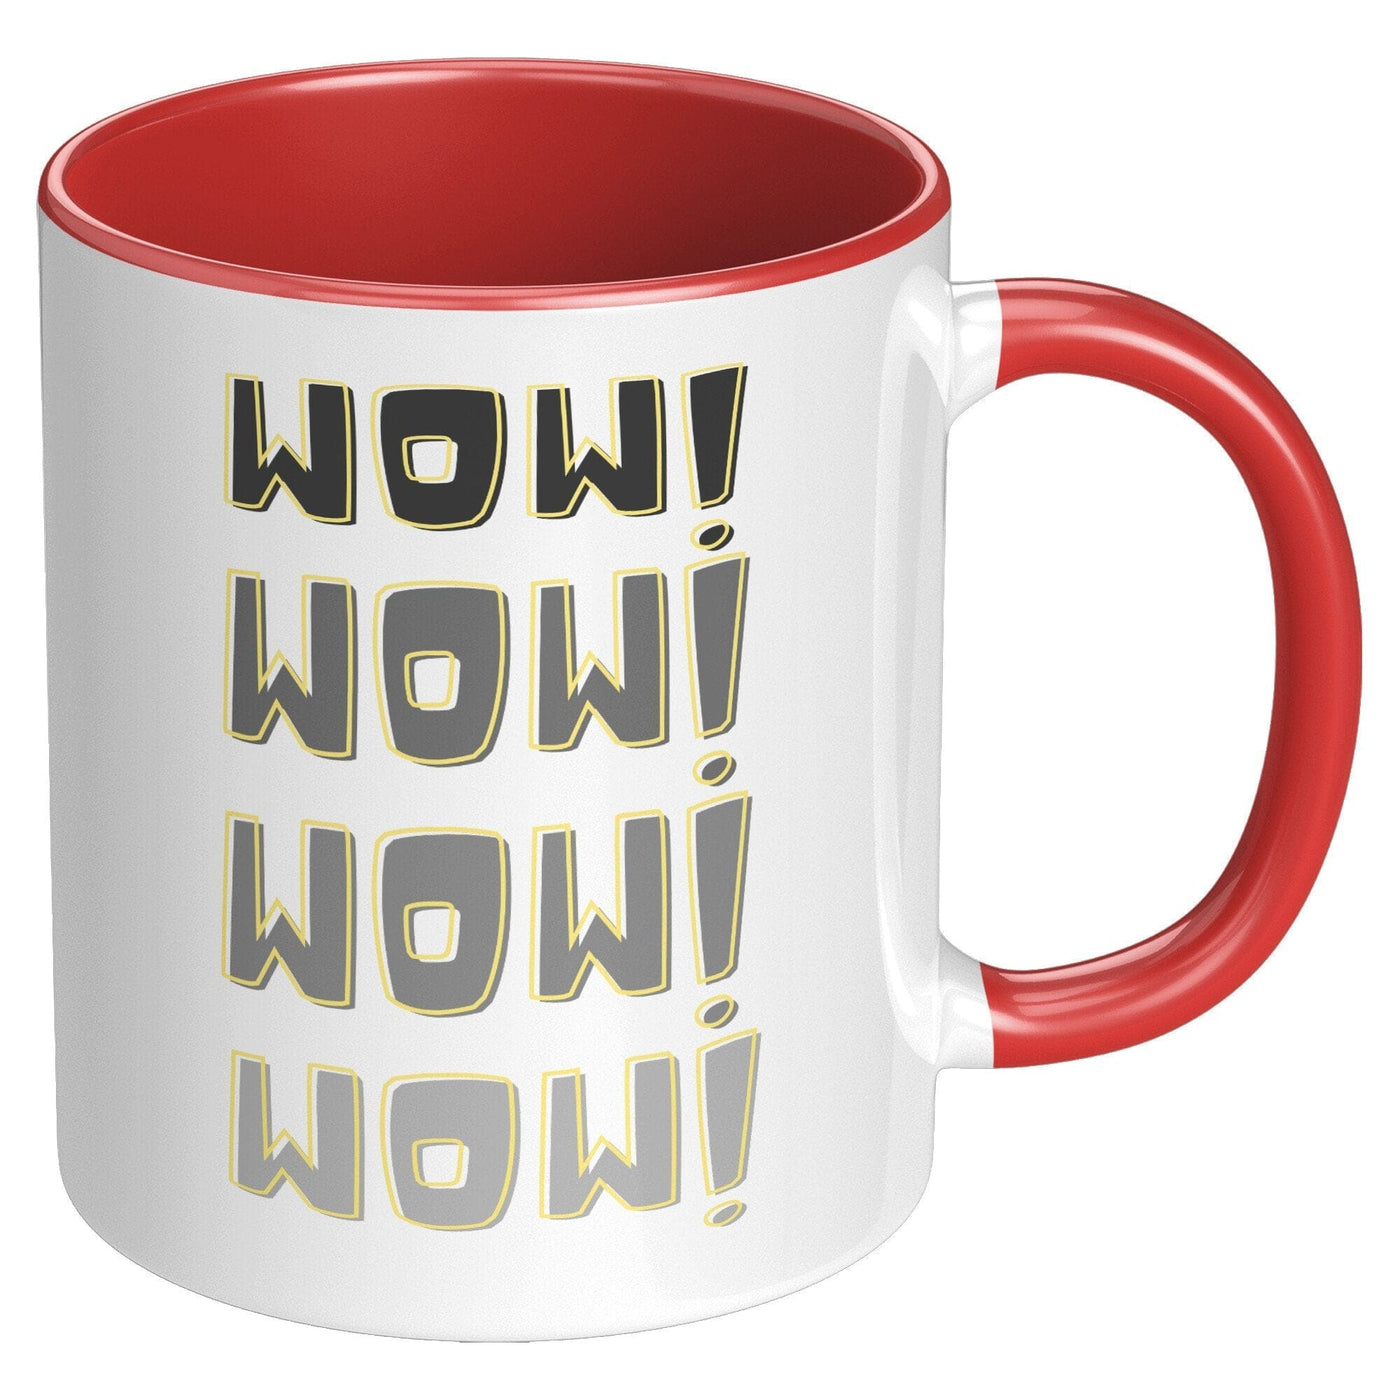 Coffee Cup Accent Ceramic Mug 11oz Wow! Wow! - Decorative | Ceramic Mugs | 11oz